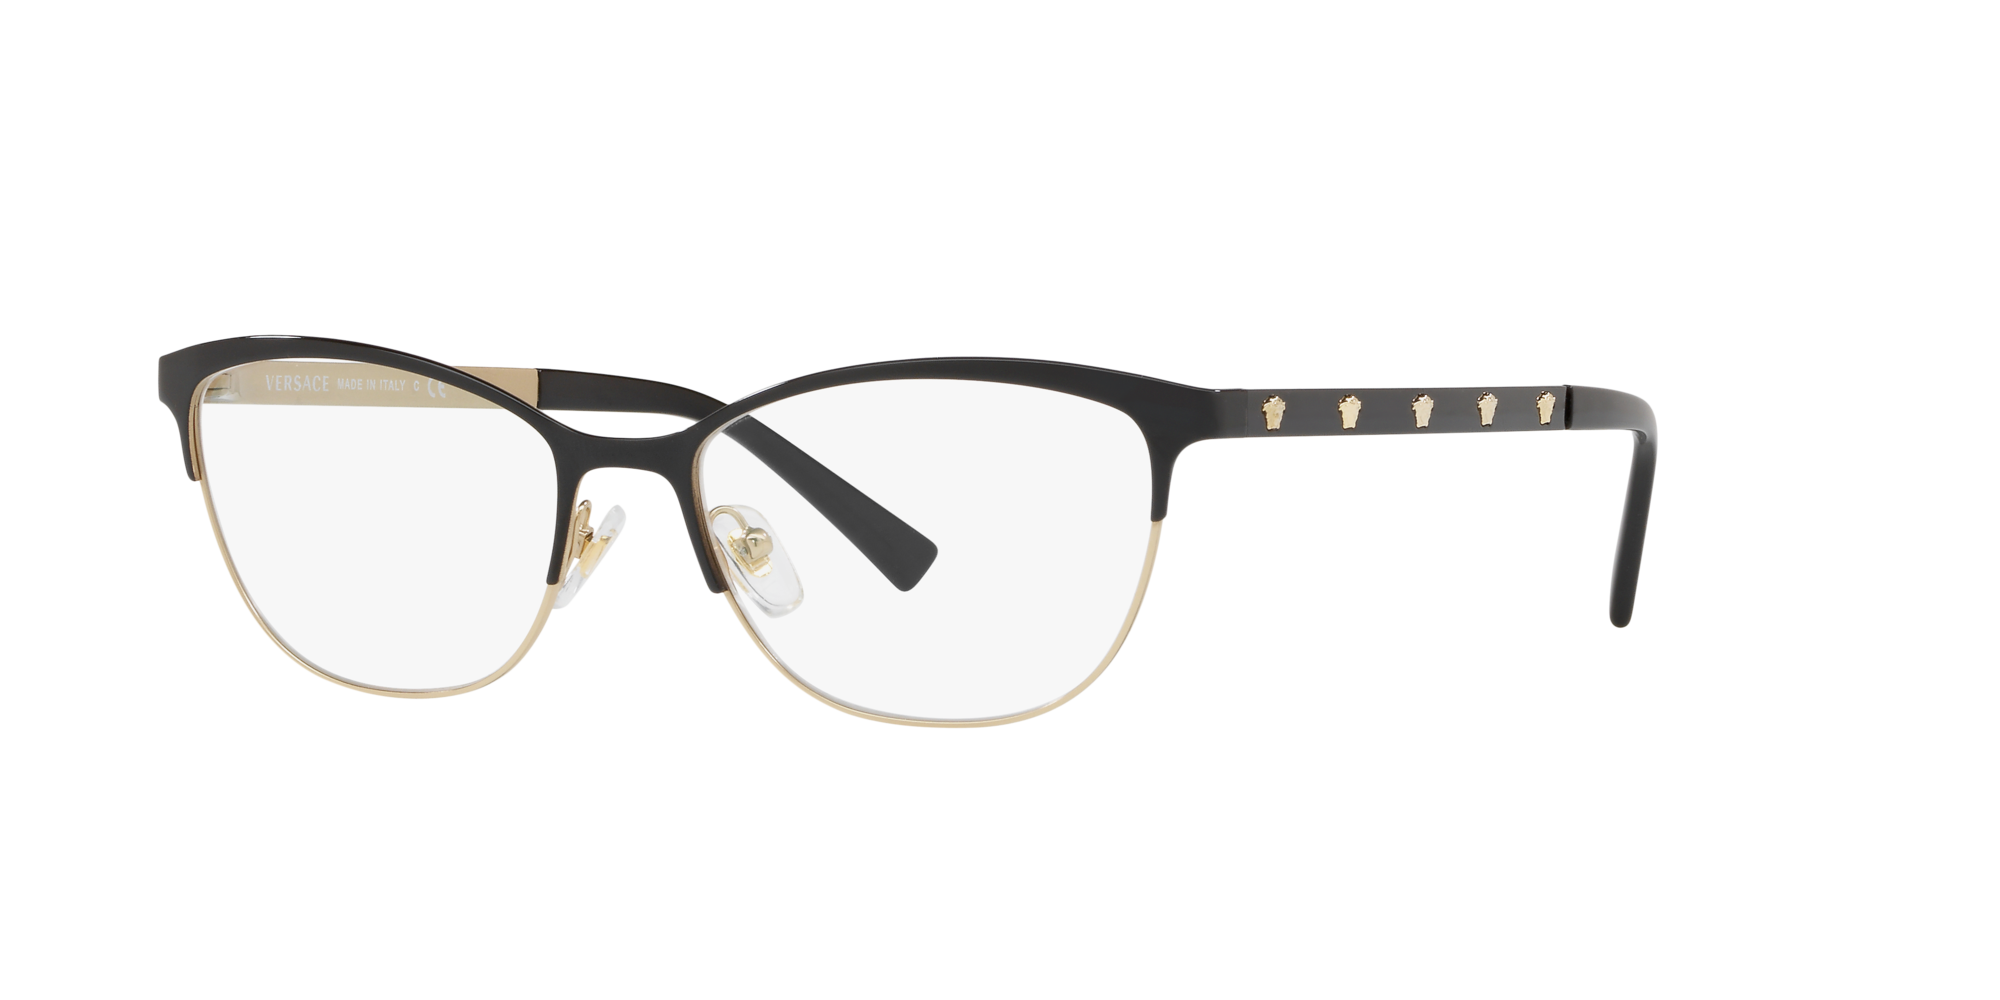 versace glasses frames lenscrafters